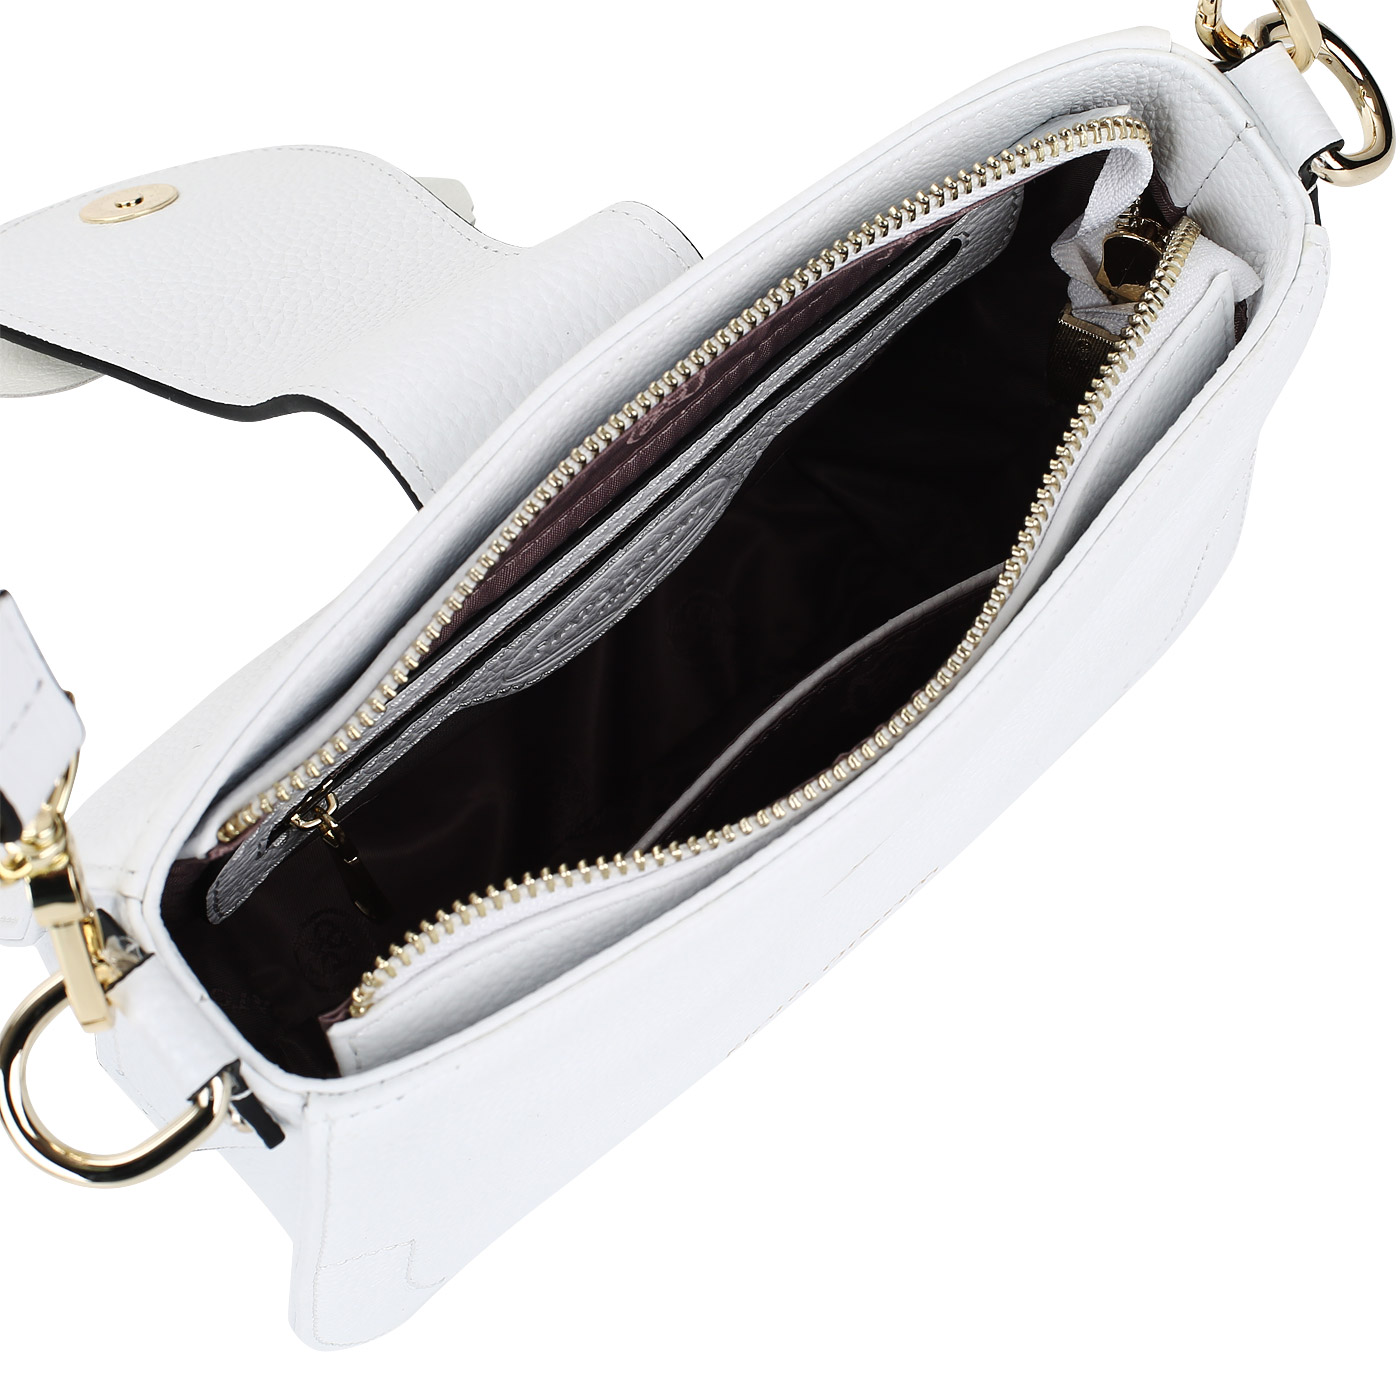 Женская сумочка из белой кожи Fiato Dream 